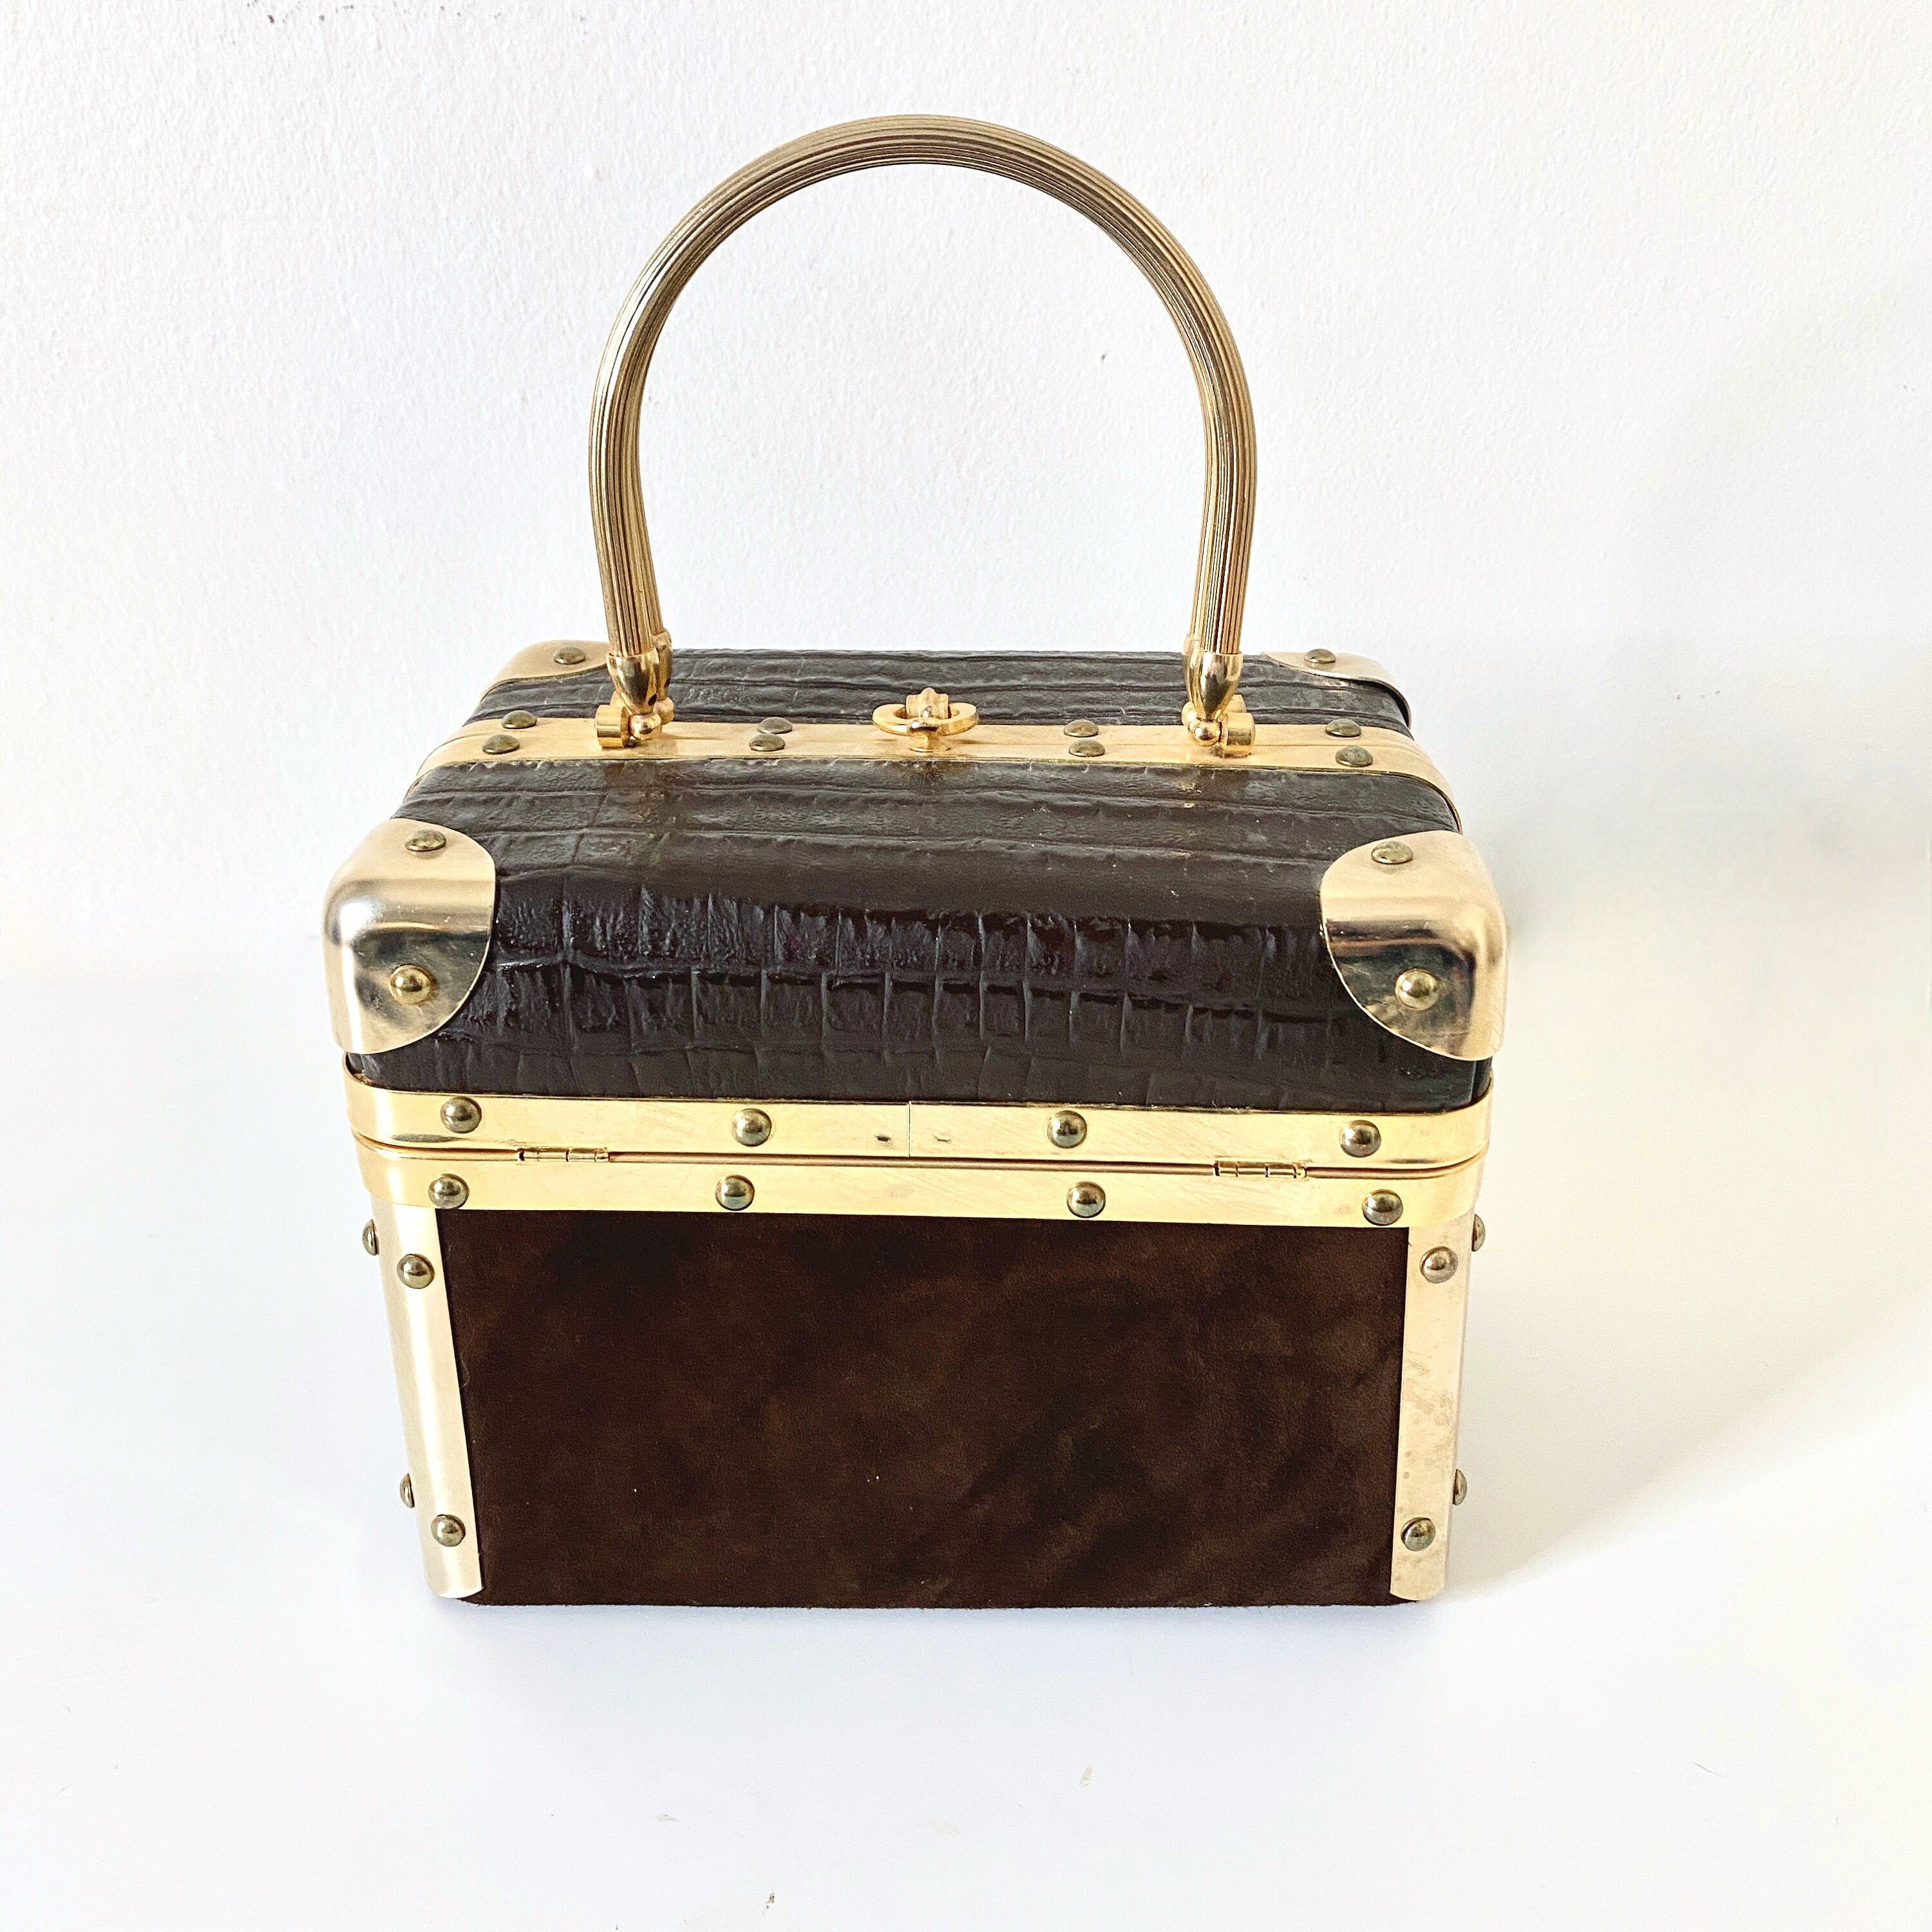 Phenomenal vintage patent flowered Delill box bag purse handbag - Ruby Lane